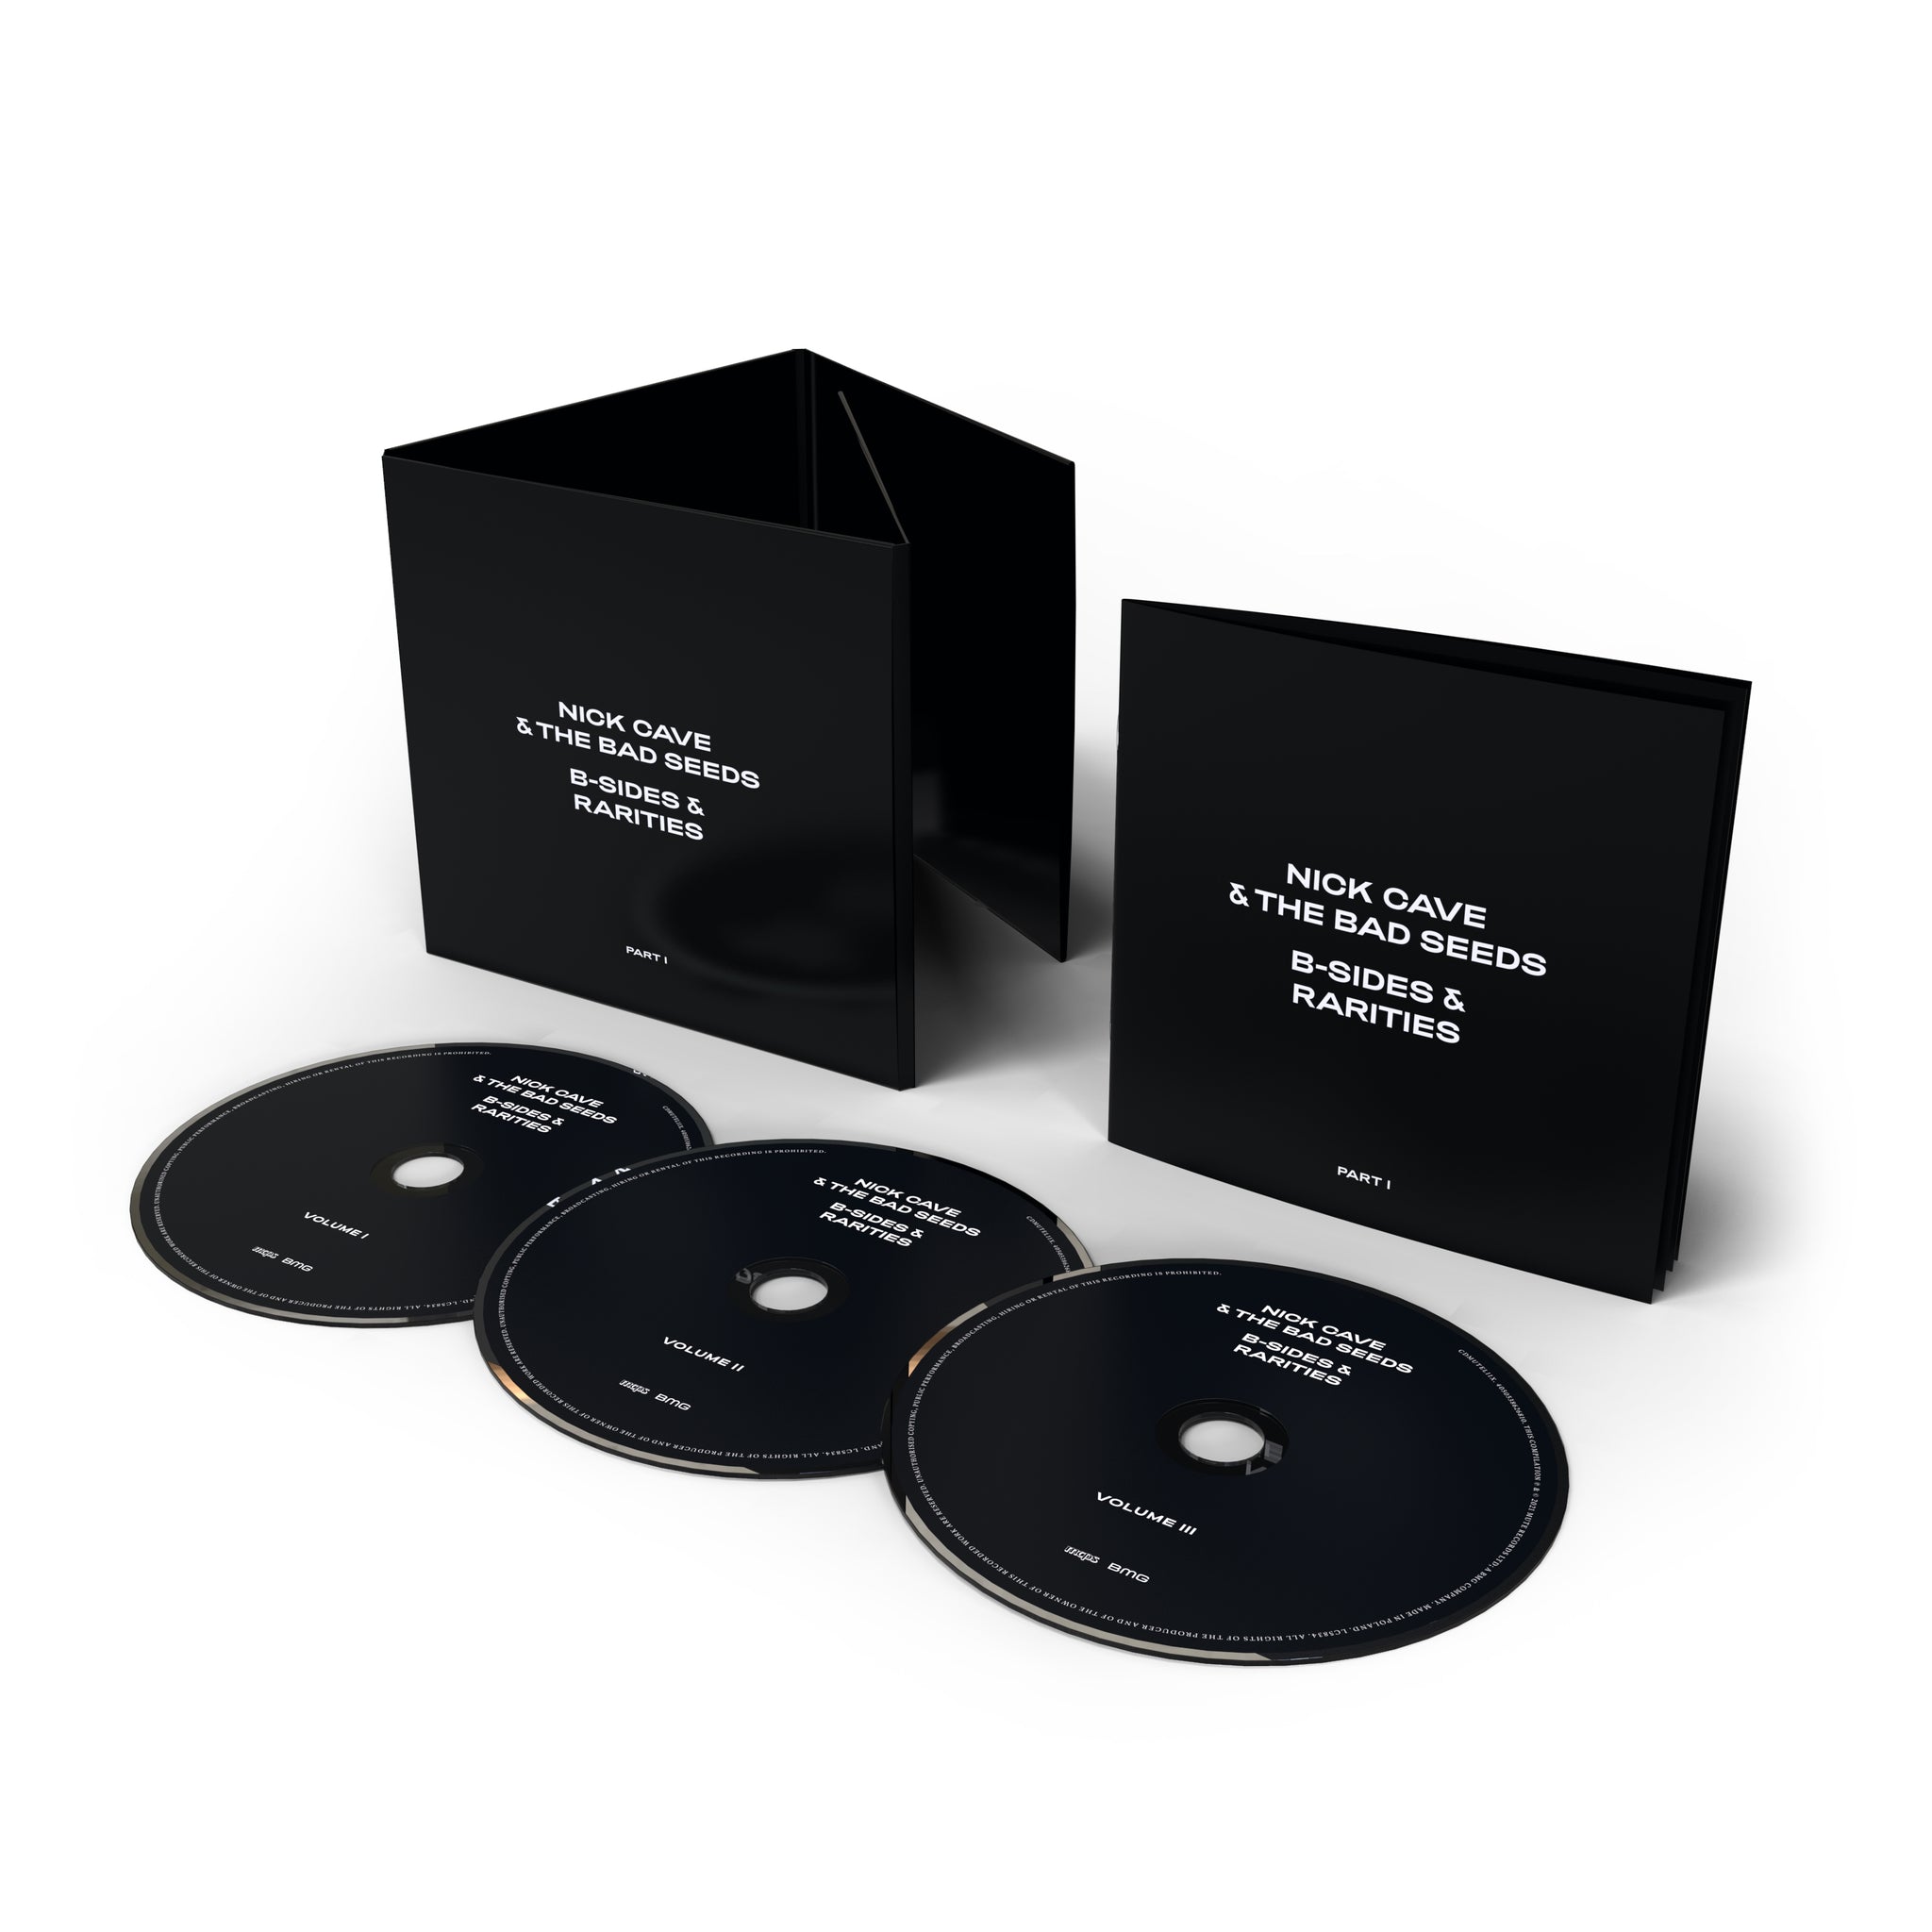 Nick Cave & The Bad Seeds - B-Sides & Rarities: Part I - Digipak 3CD | Mute  Bank